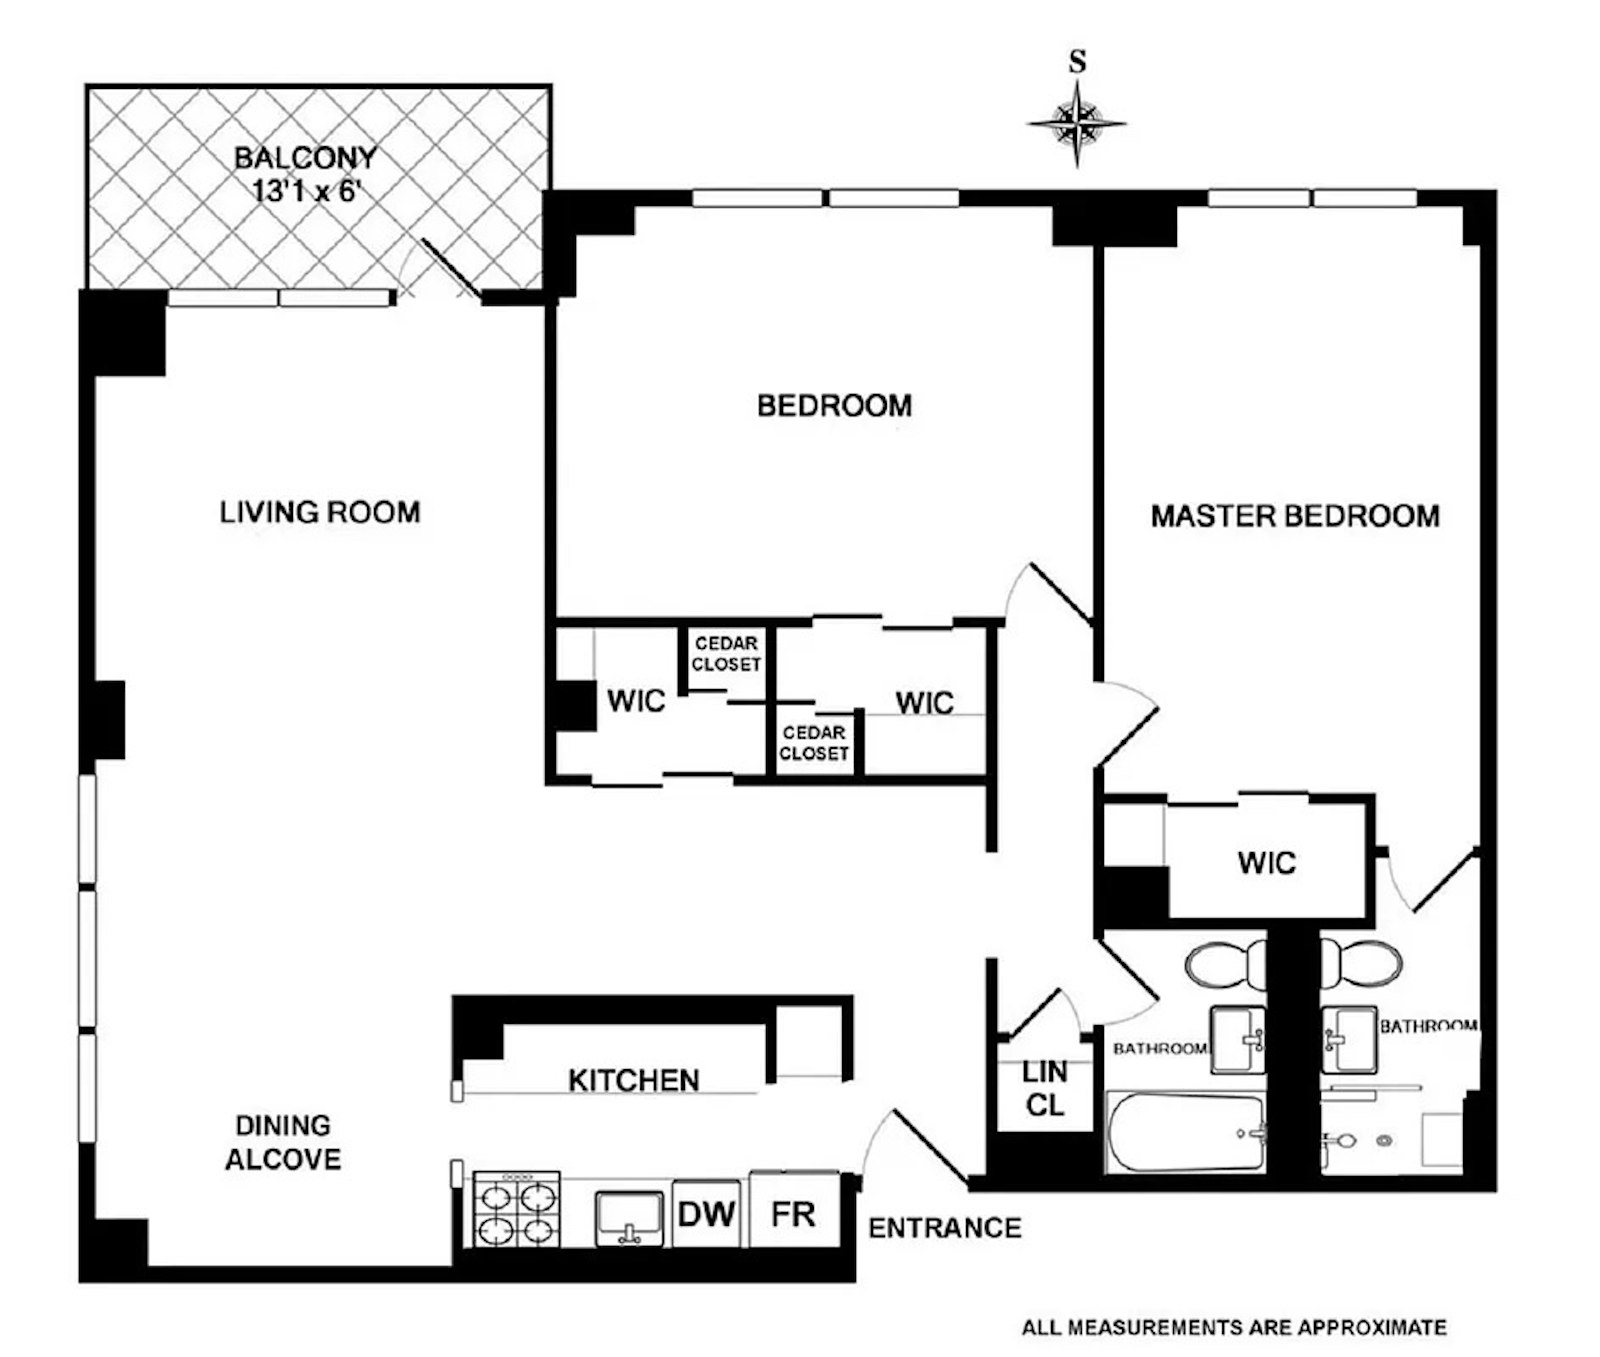 Floorplan for 382 Central Park W, 4D